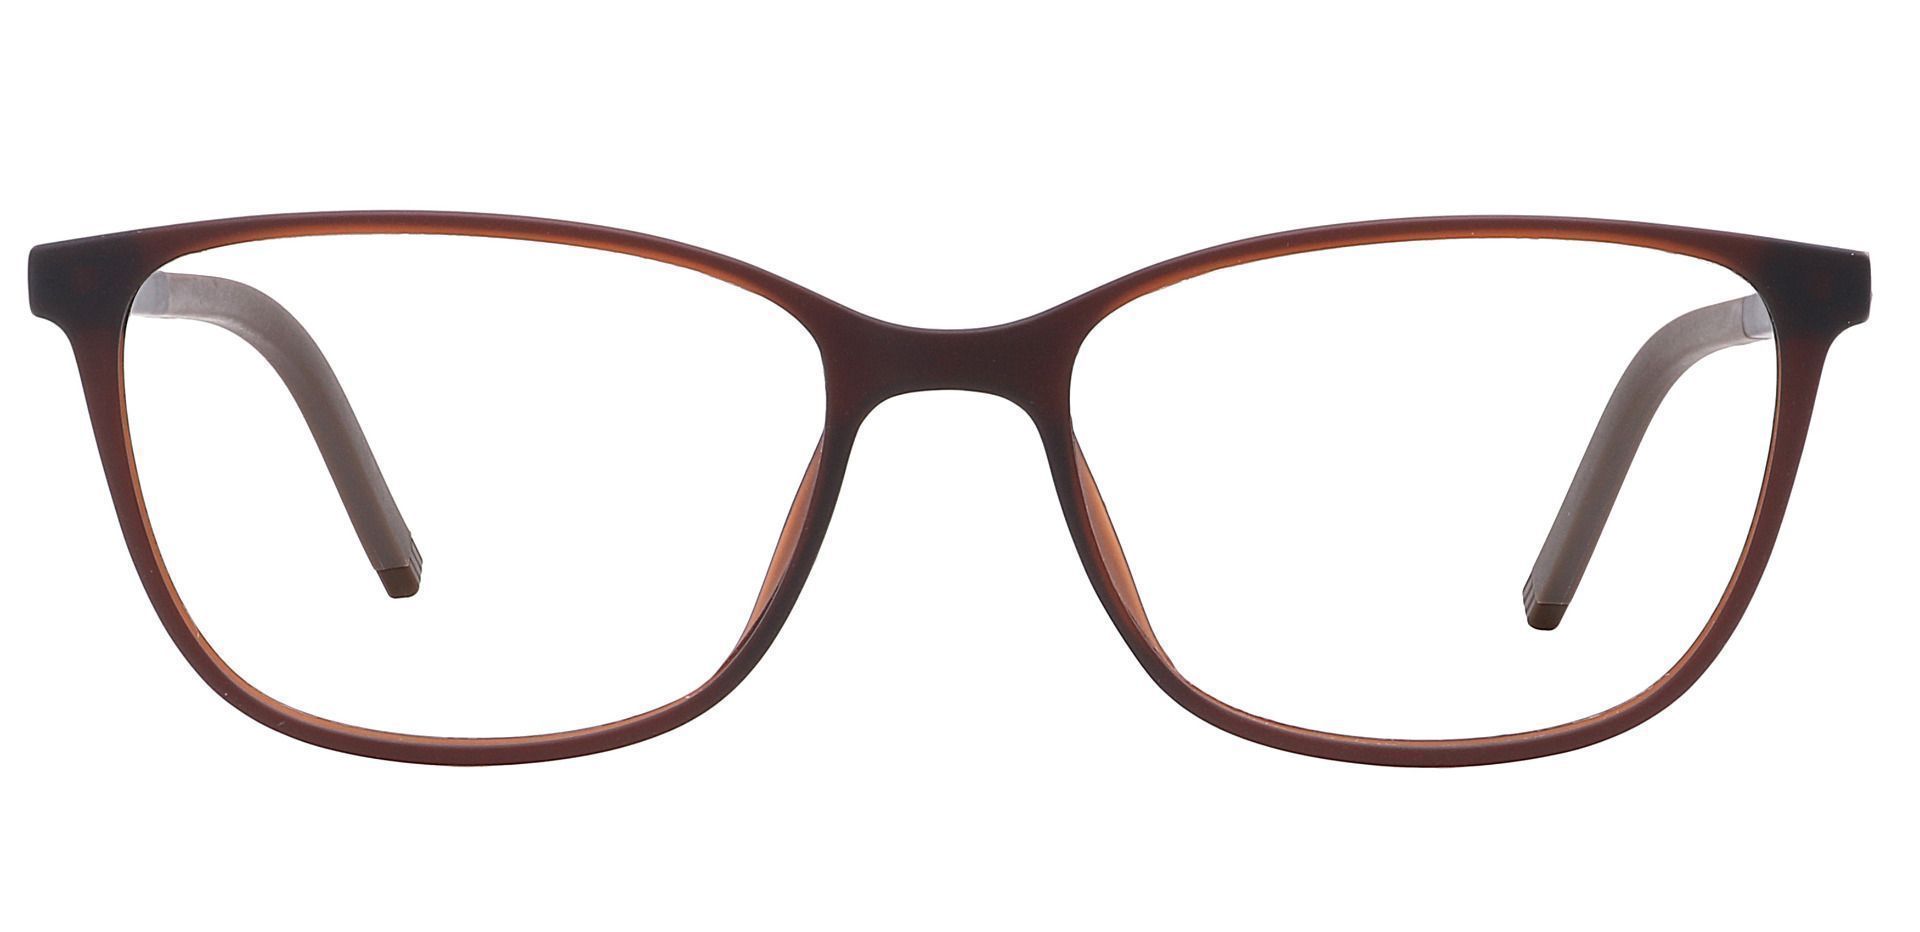 Danica Square Eyeglasses Frame - Brown